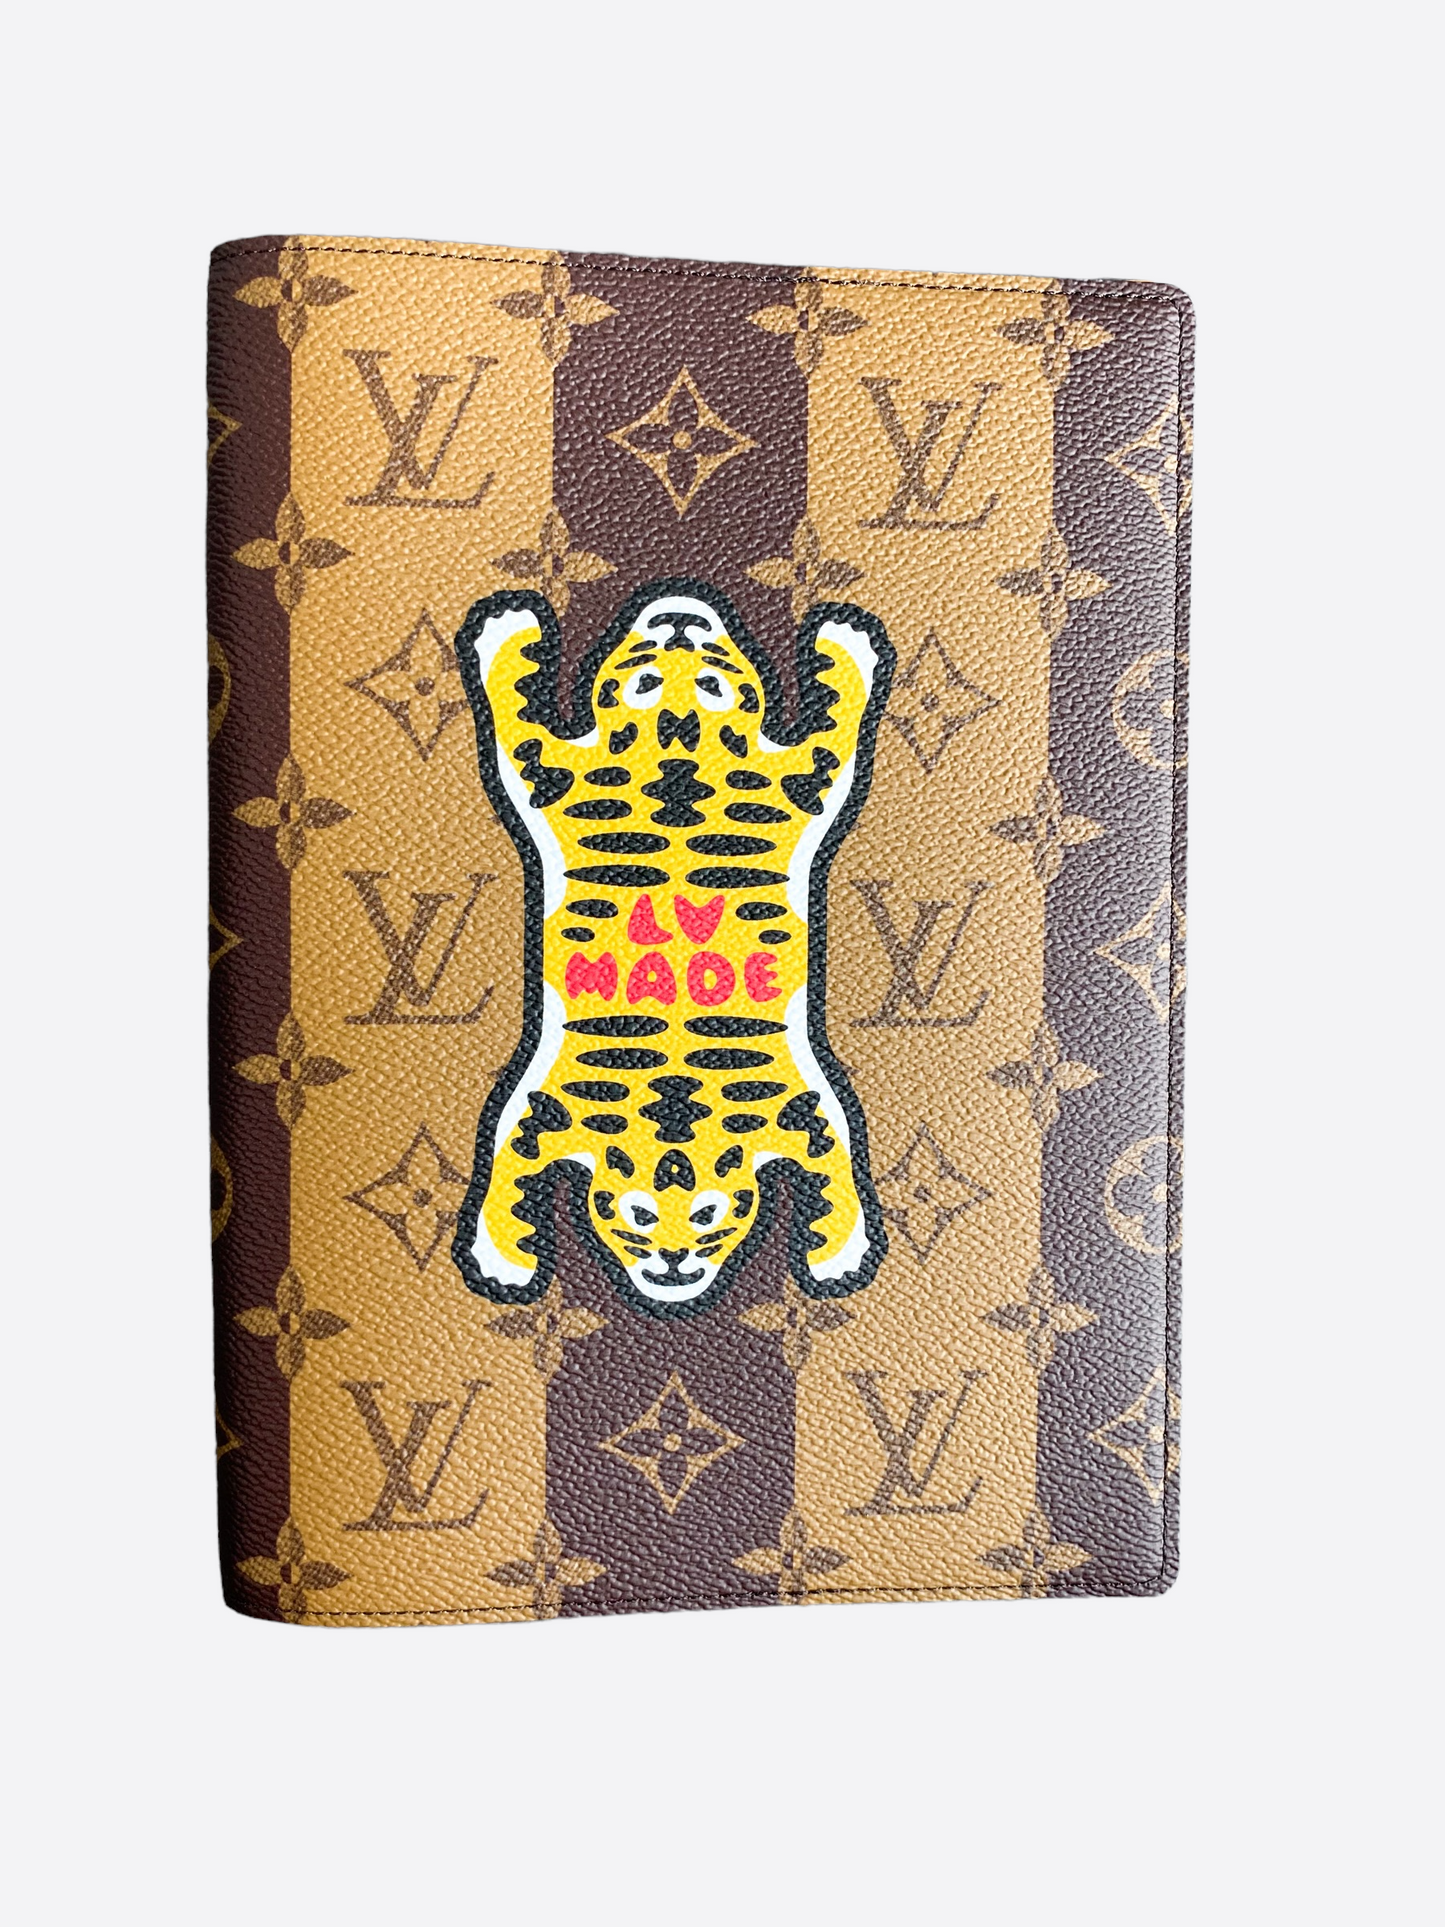 Louis Vuitton Monogram Tiger Key Chain